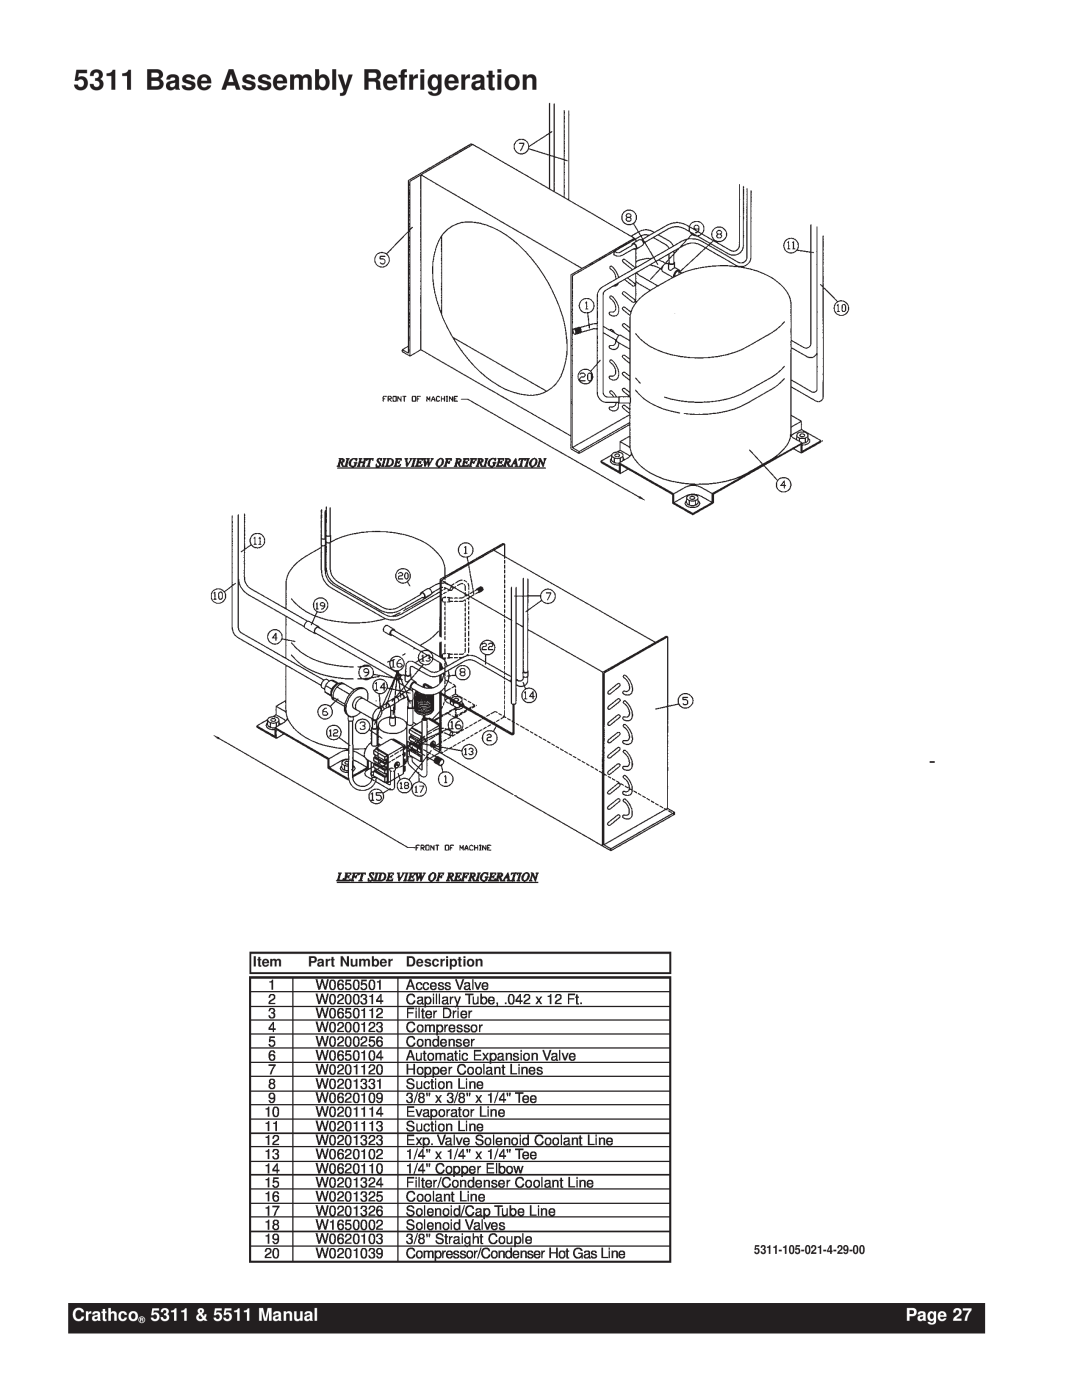 Grindmaster Base Assembly Refrigeration, Crathco 5311 & 5511 Manual, Page, Item, Part Number, Description 